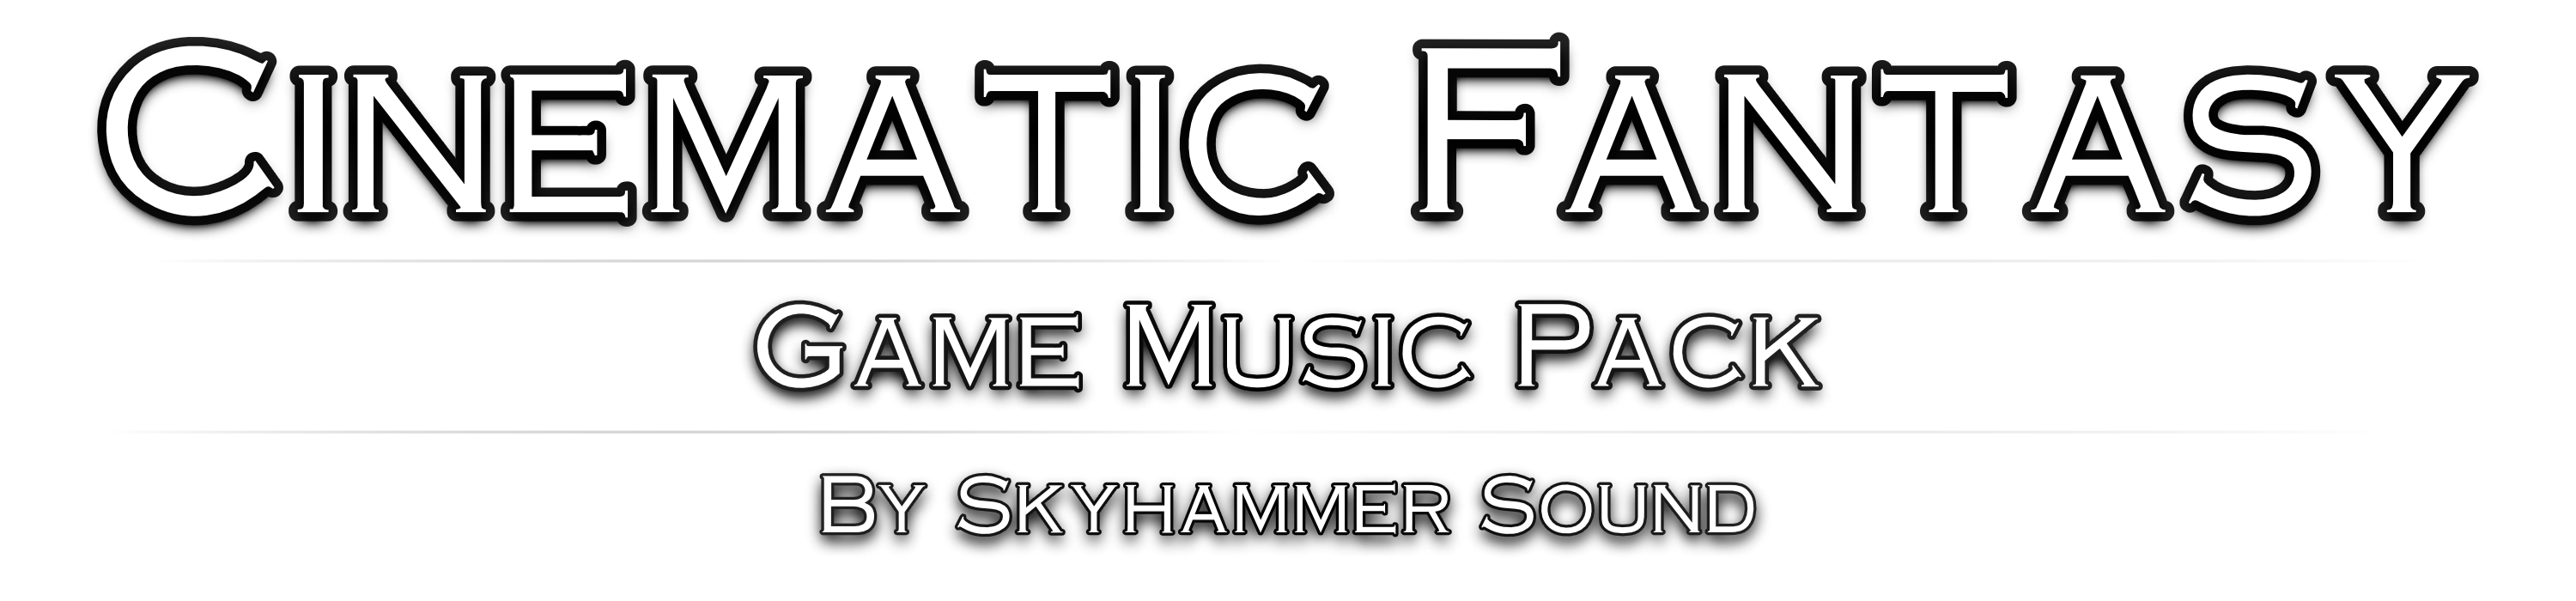 Cinematic Fantasy Game Music Pack 2.0